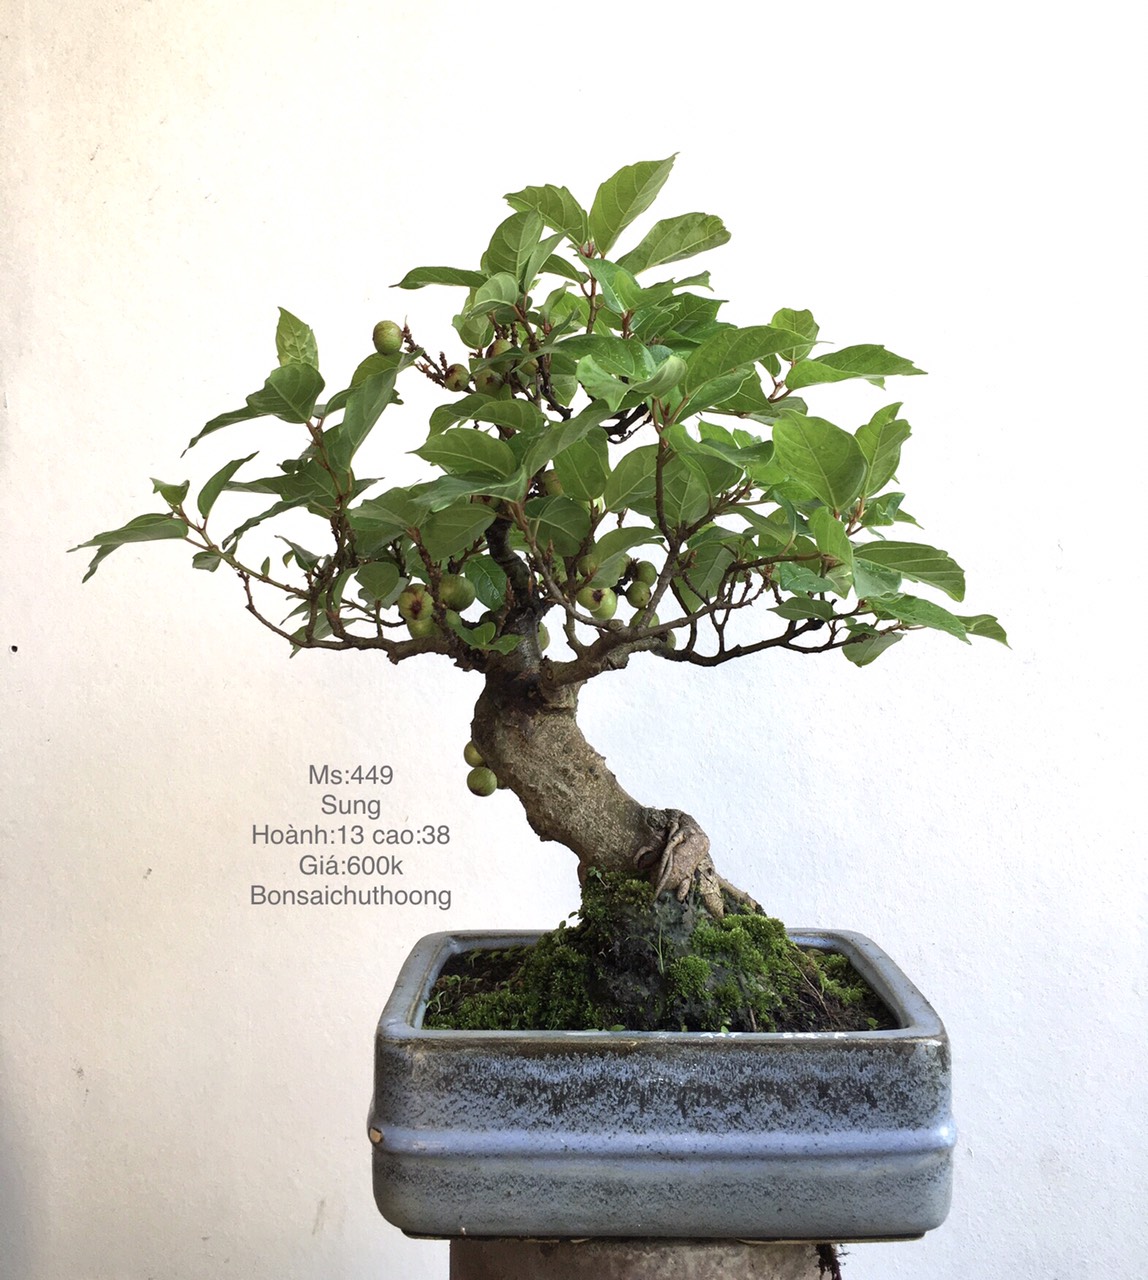 Sung bonsai